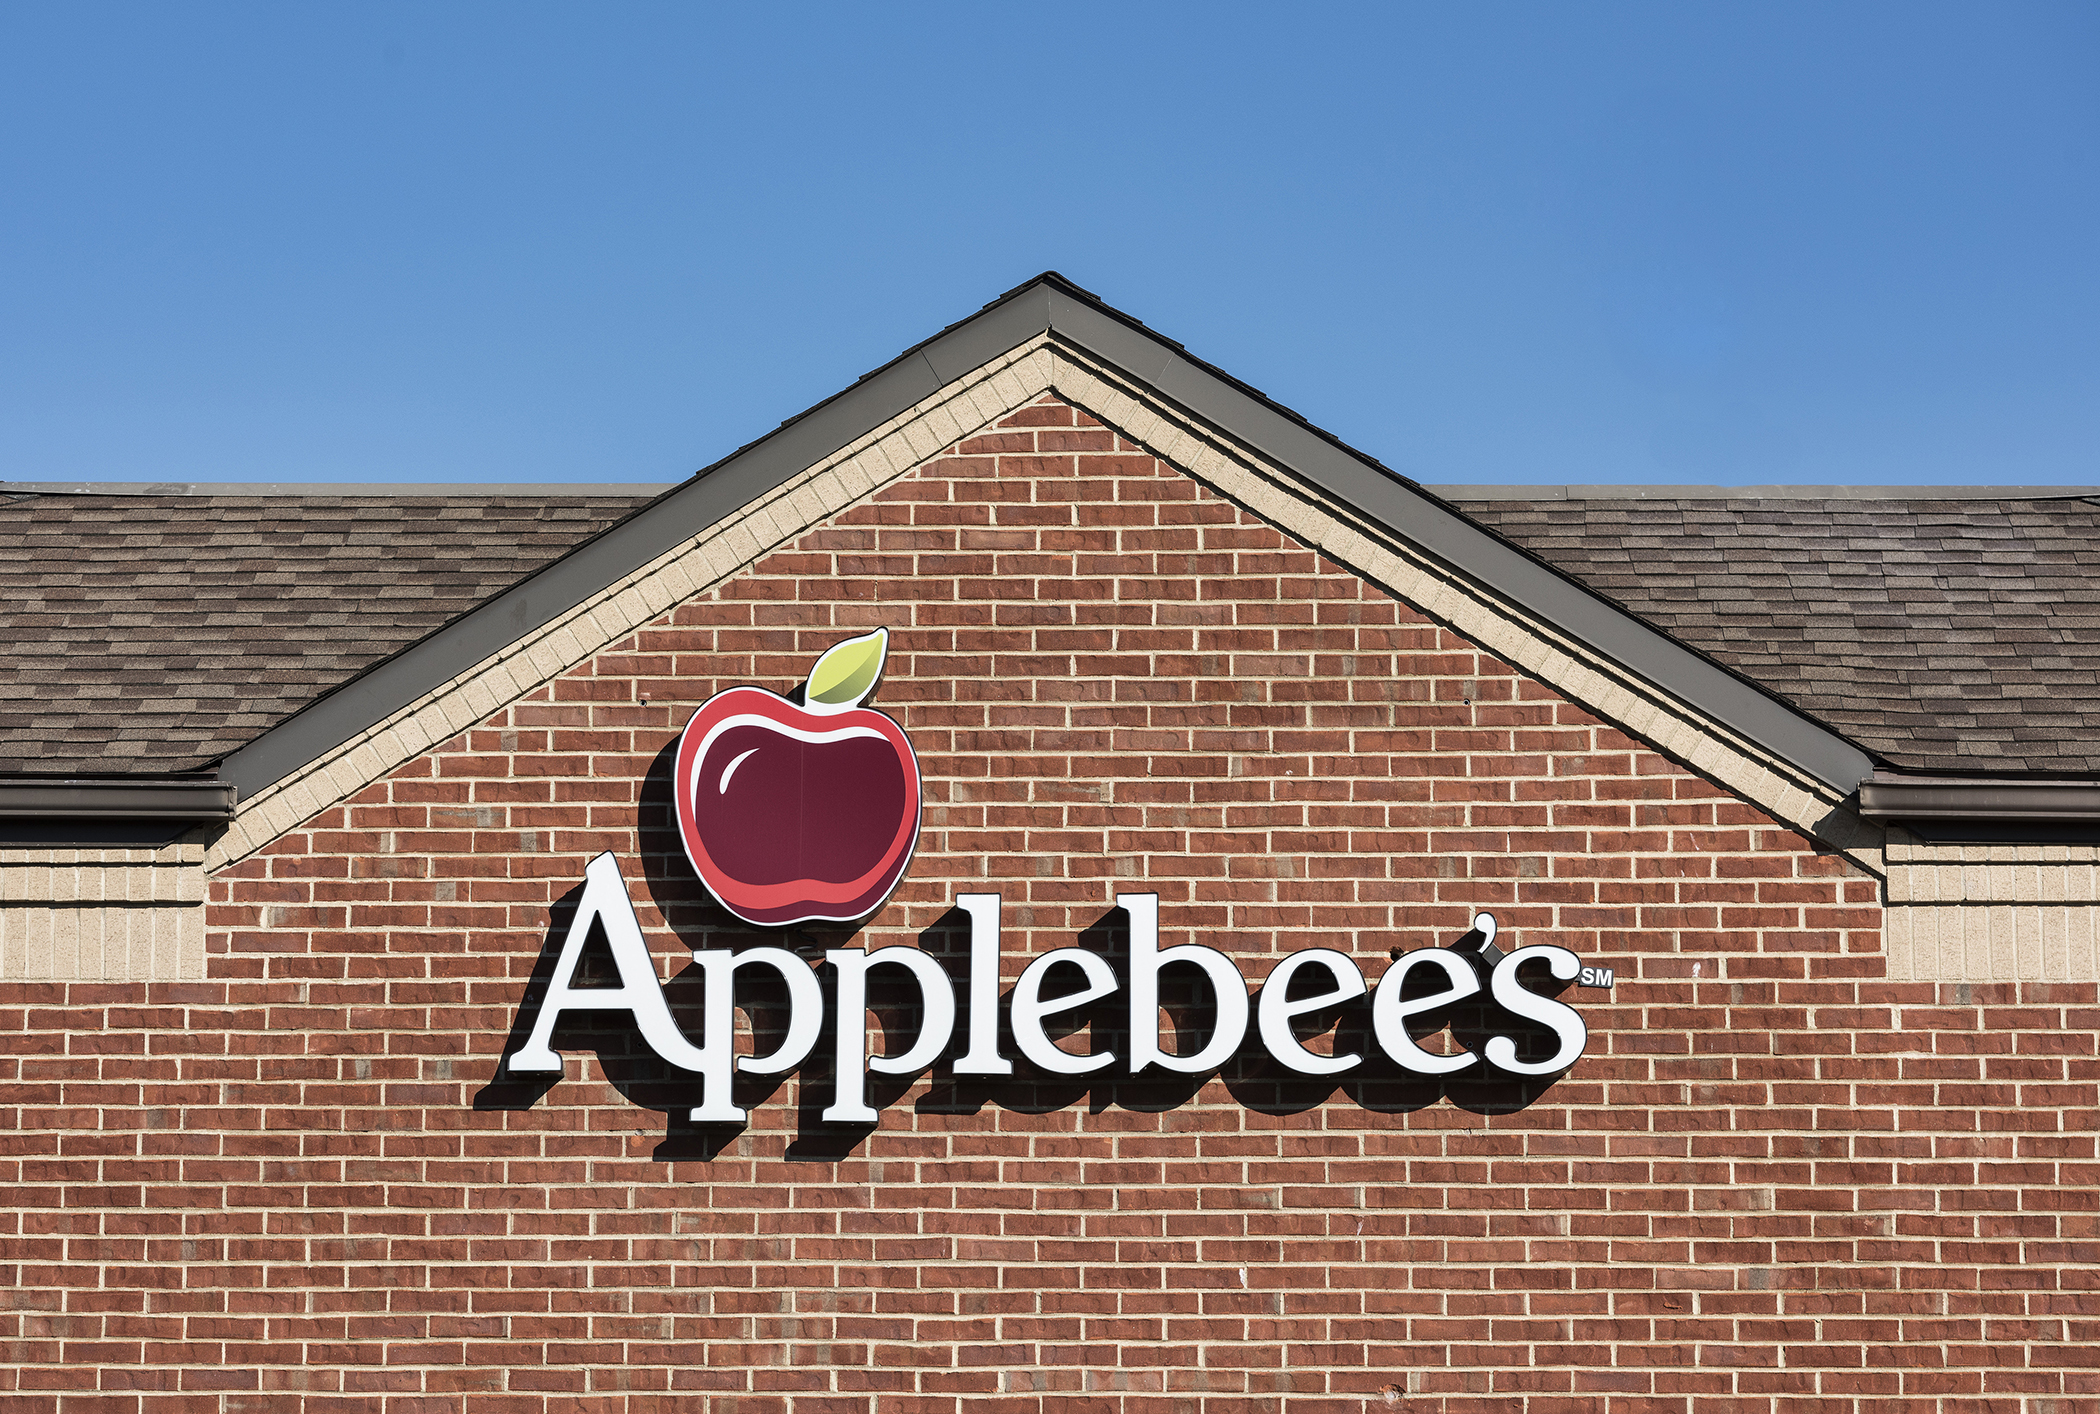 Applebee's exterior